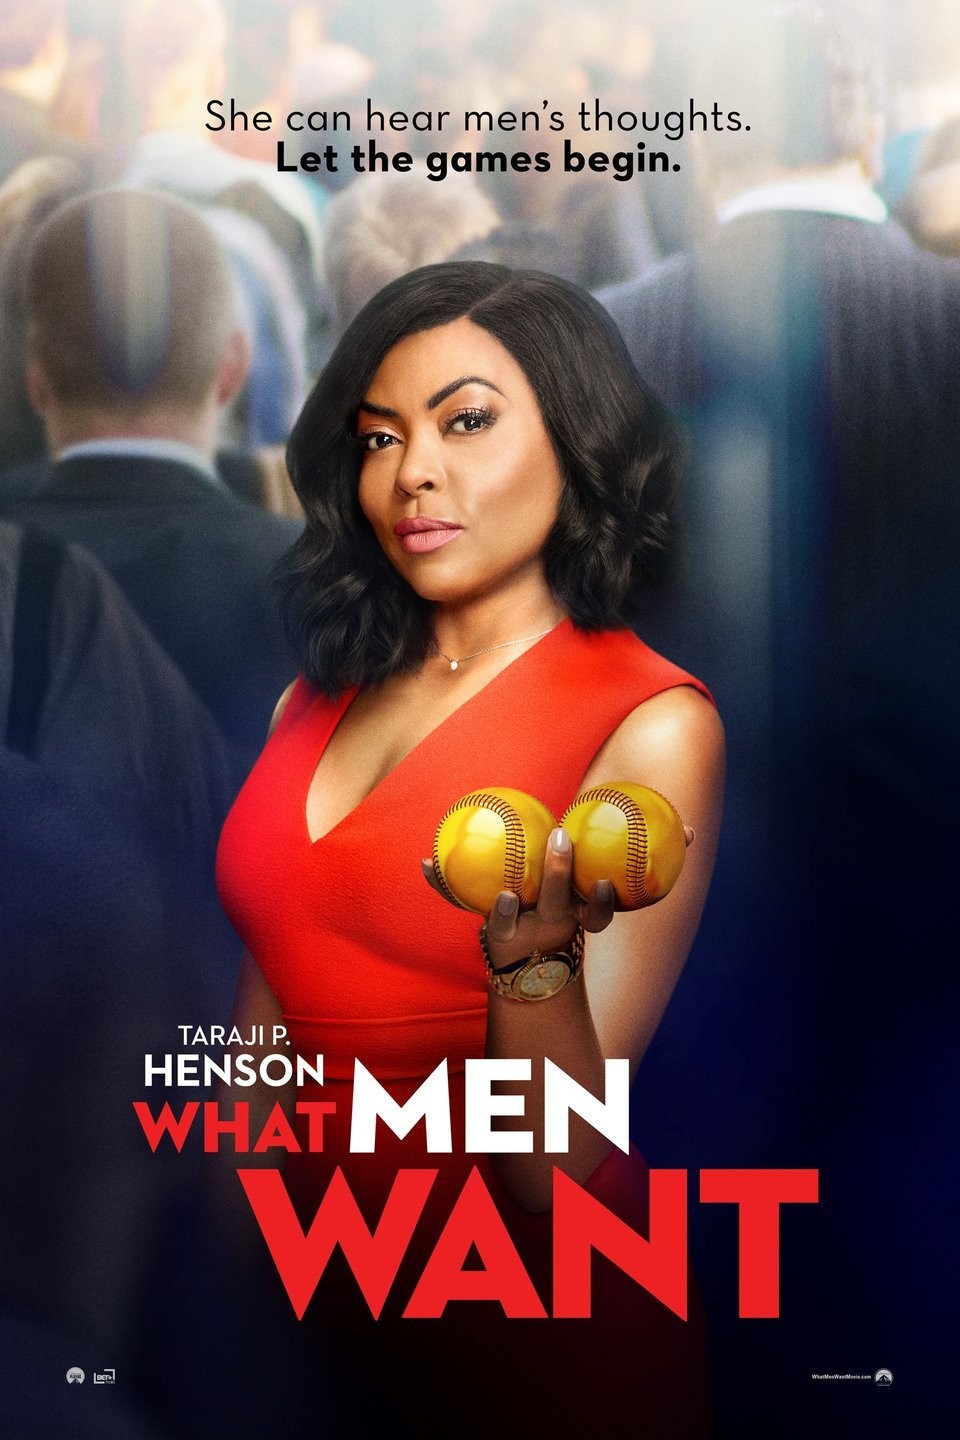 What Men Want' Review: Taraji P. Henson Stars in Gender-Flipped Remake